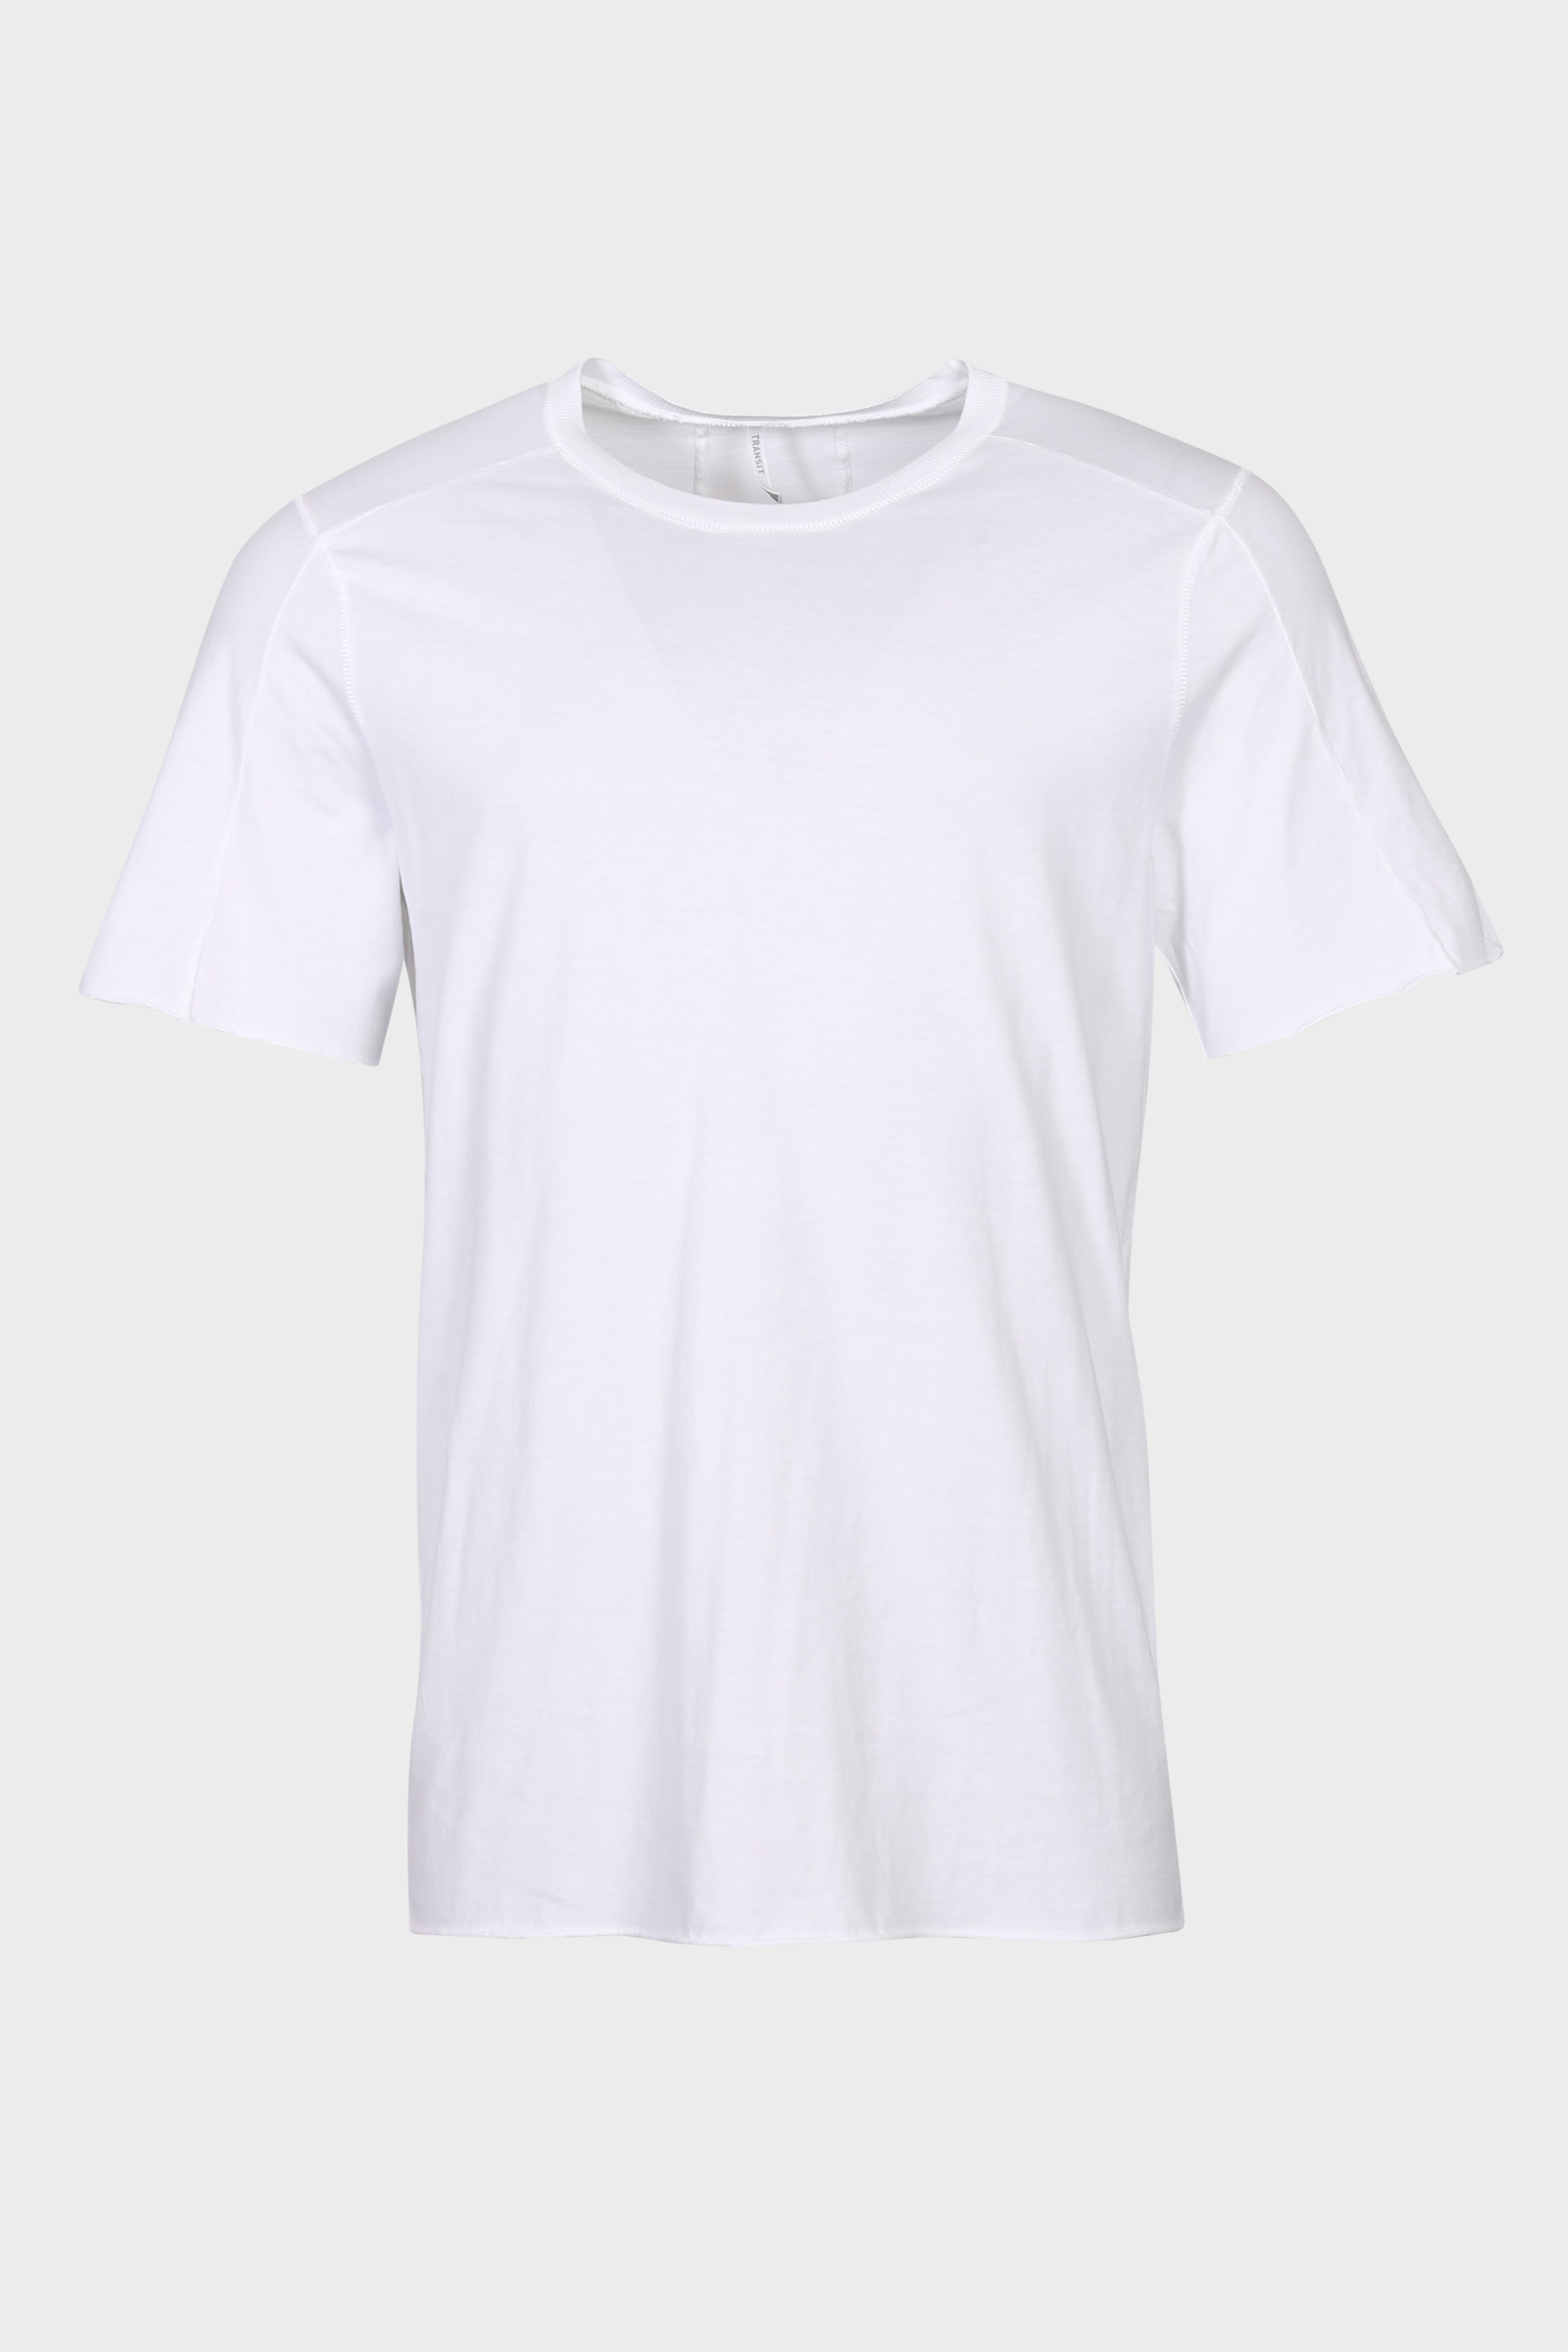 TRANSIT UOMO Cotton Stretch T-Shirt in White